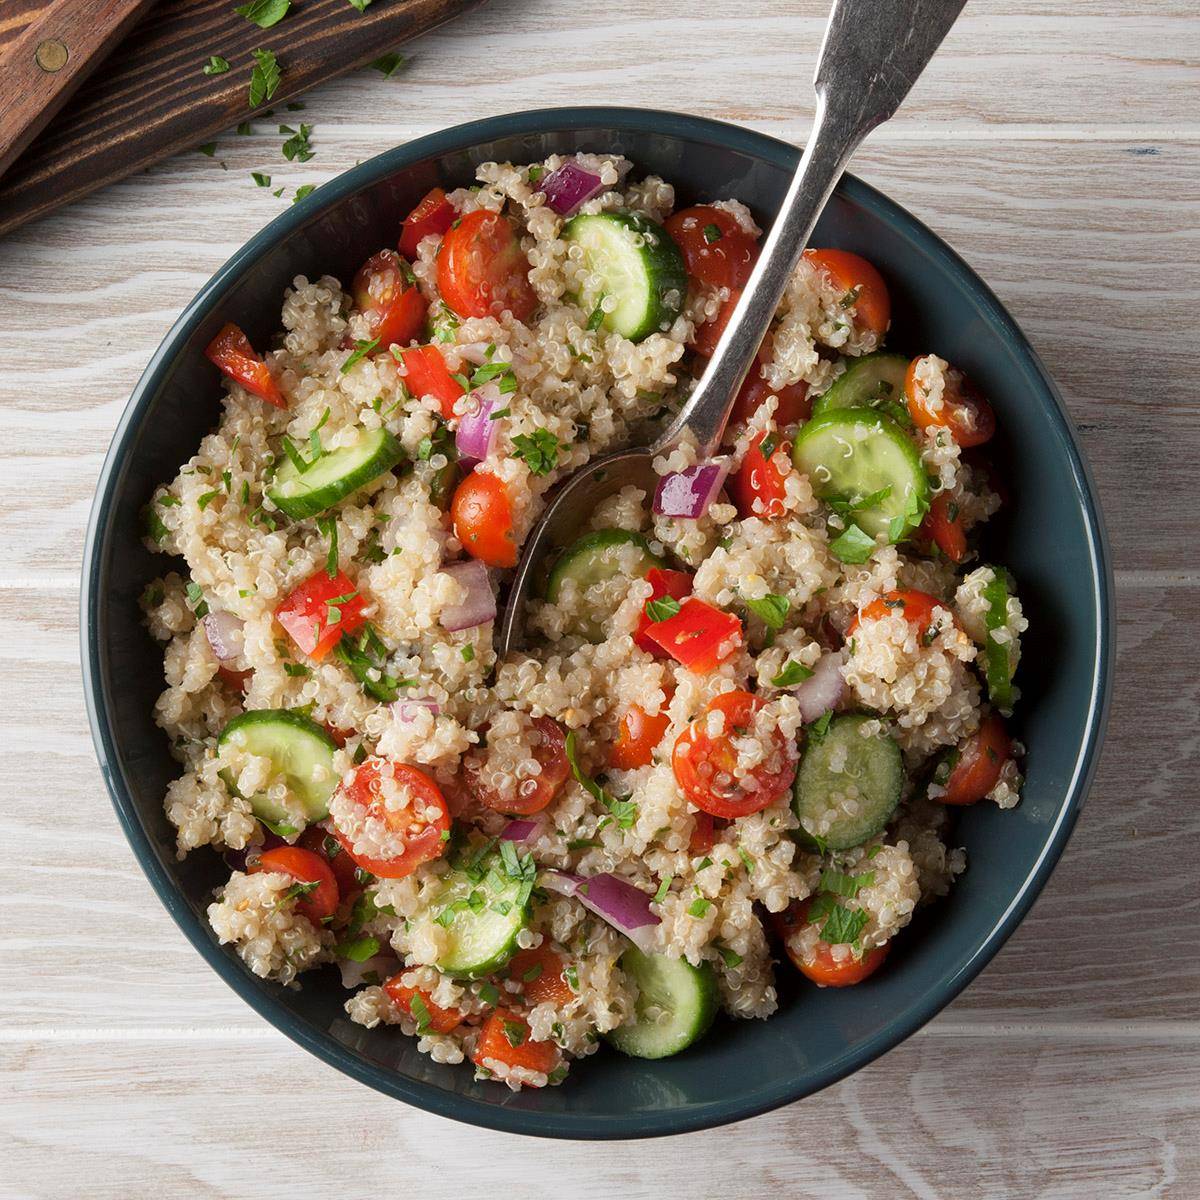 Vegetable and Quinoa Salad